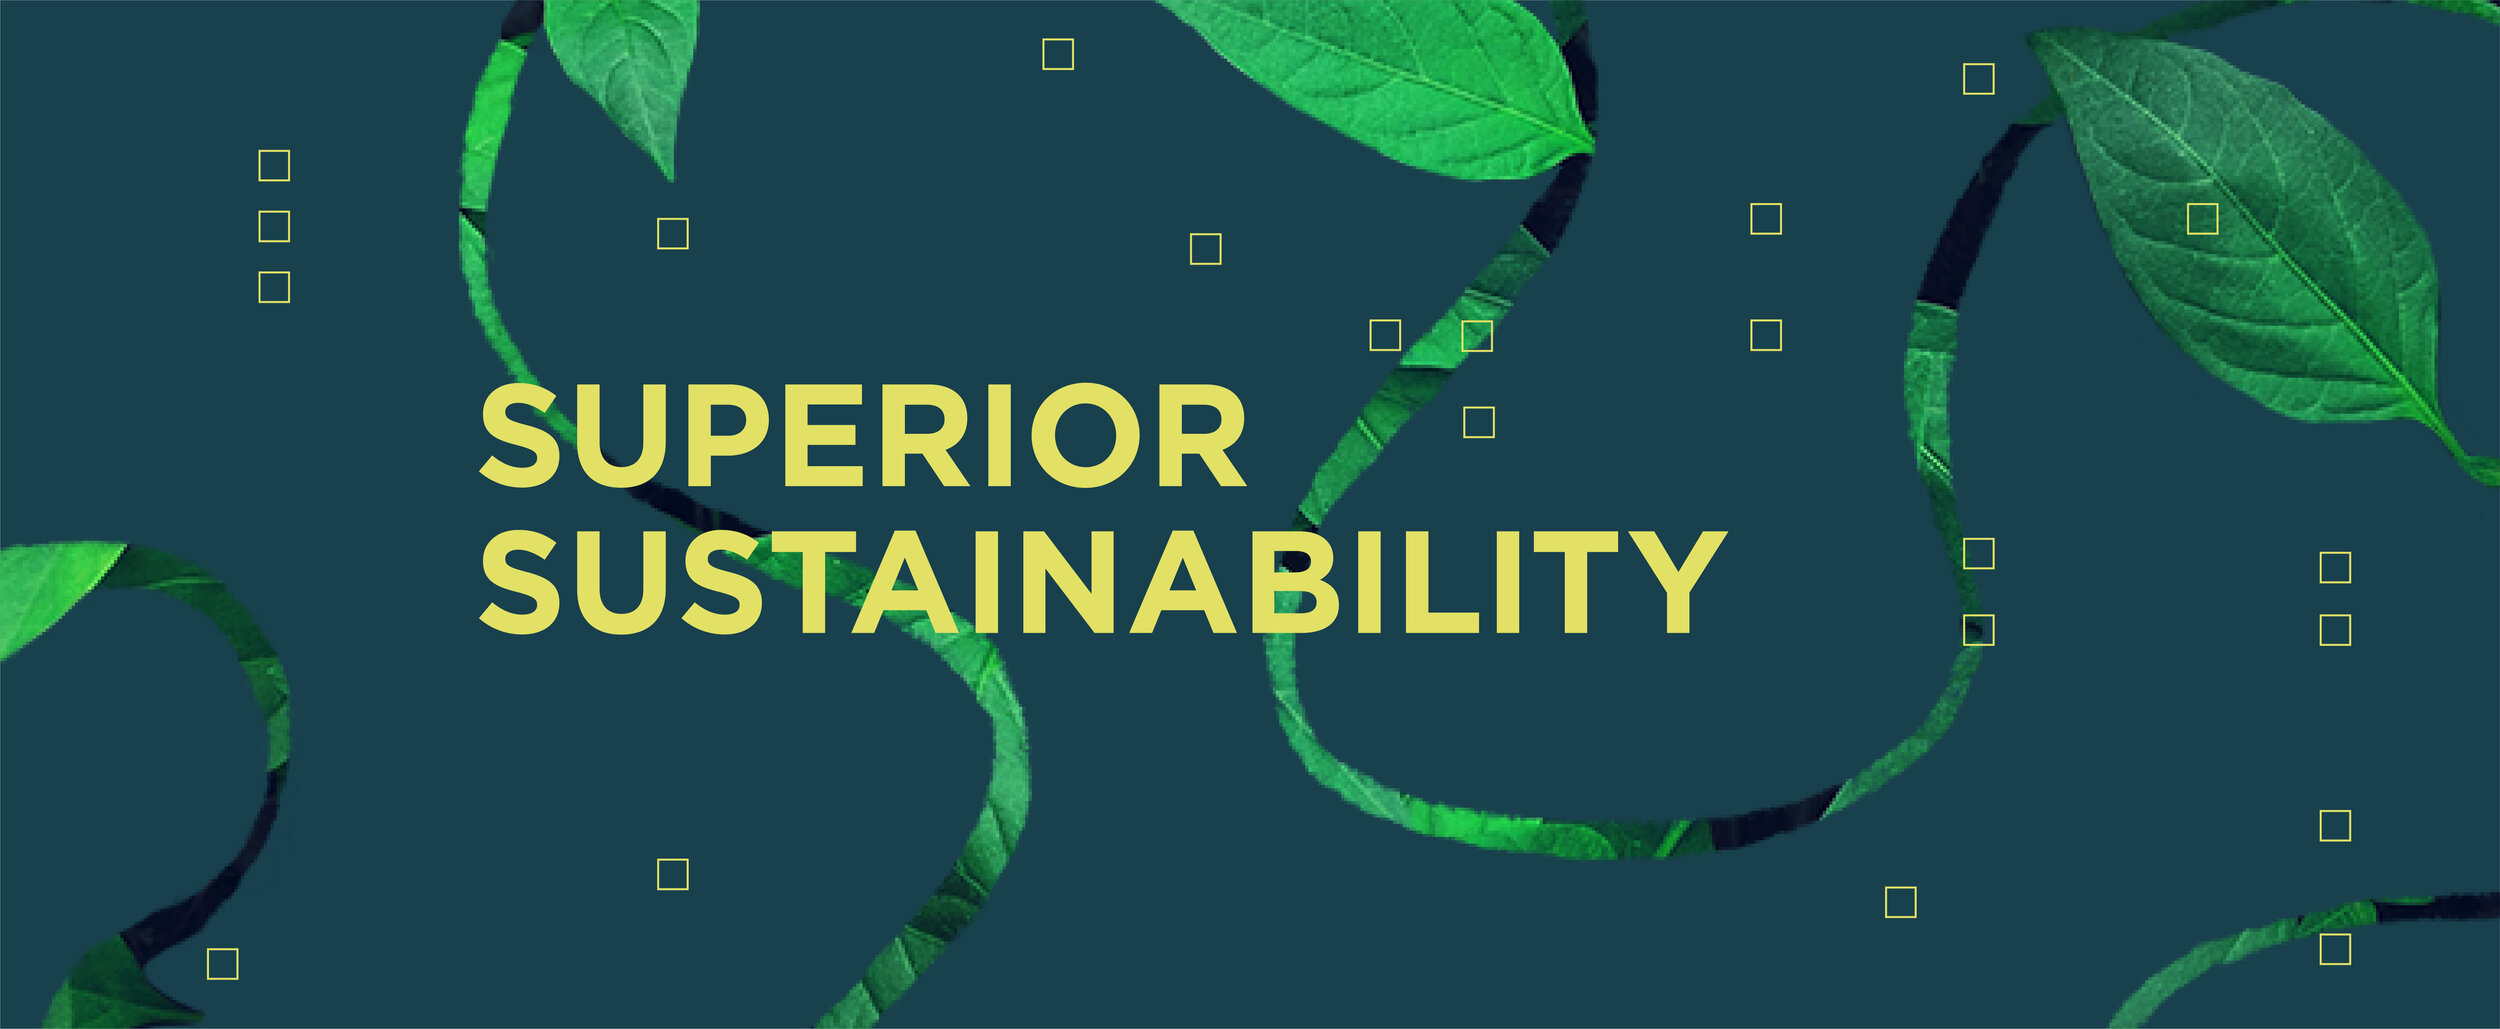 Superior Sustainability